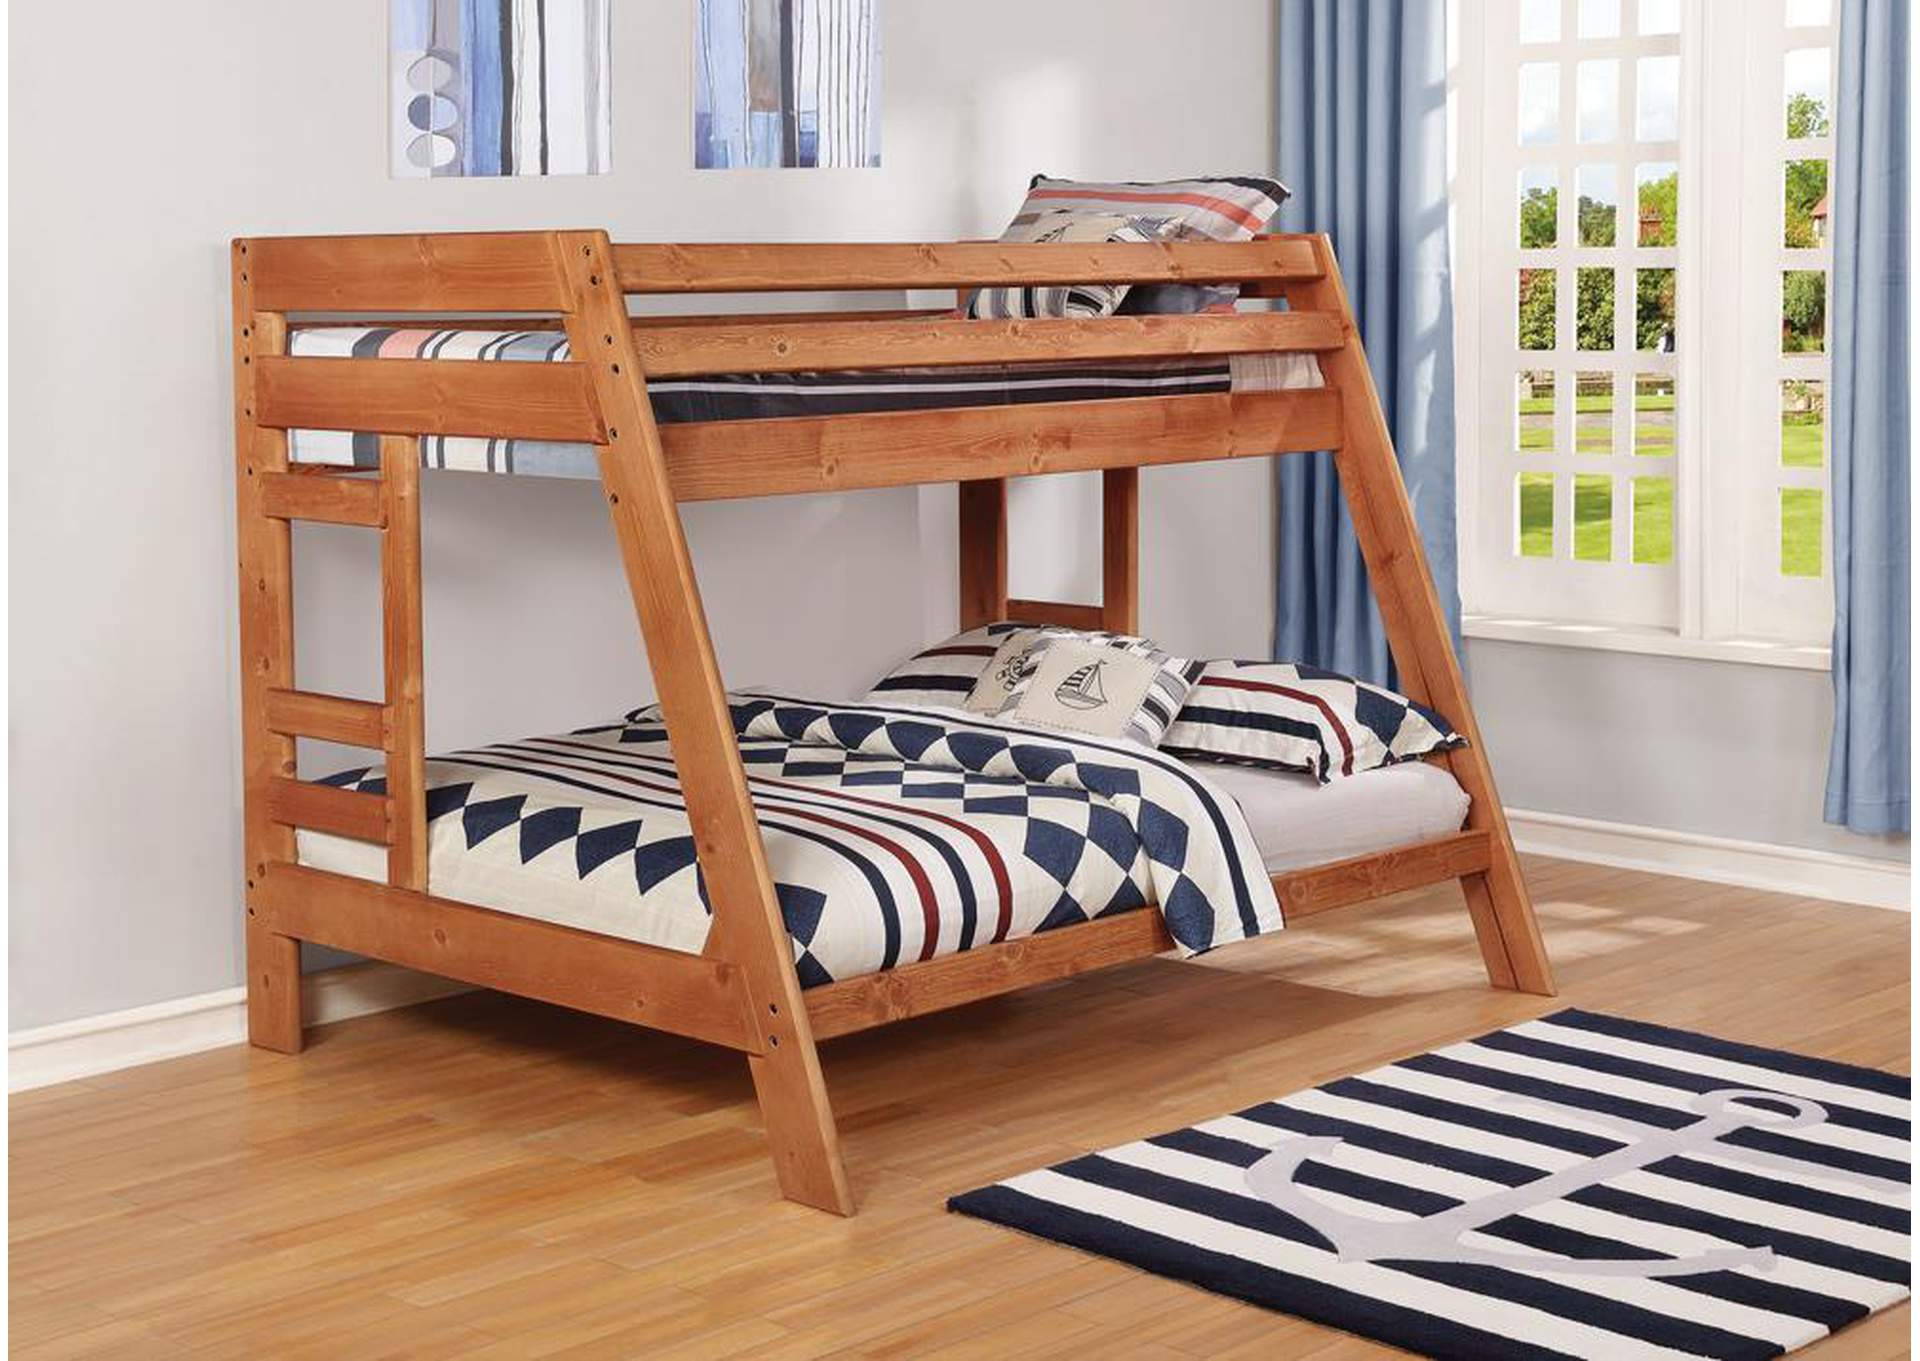 Woods Furniture Gallery Granbury Tx Twin Full Bunk Bed